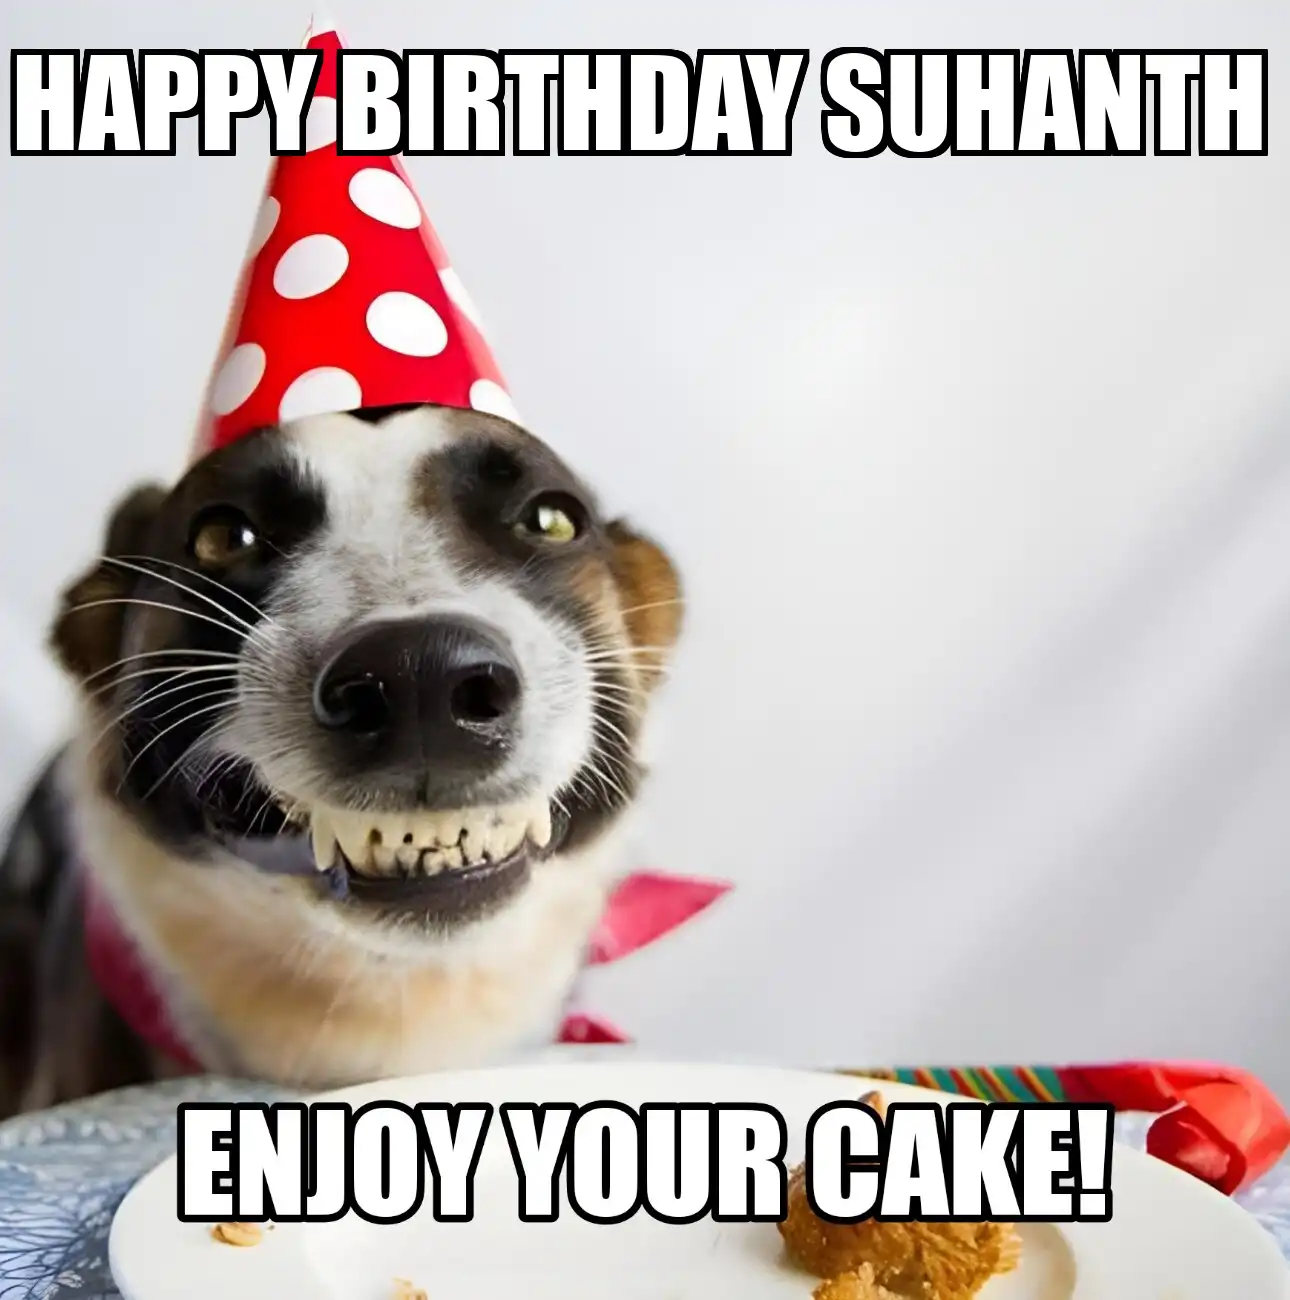 Happy Birthday Suhanth Enjoy Your Cake Dog Meme